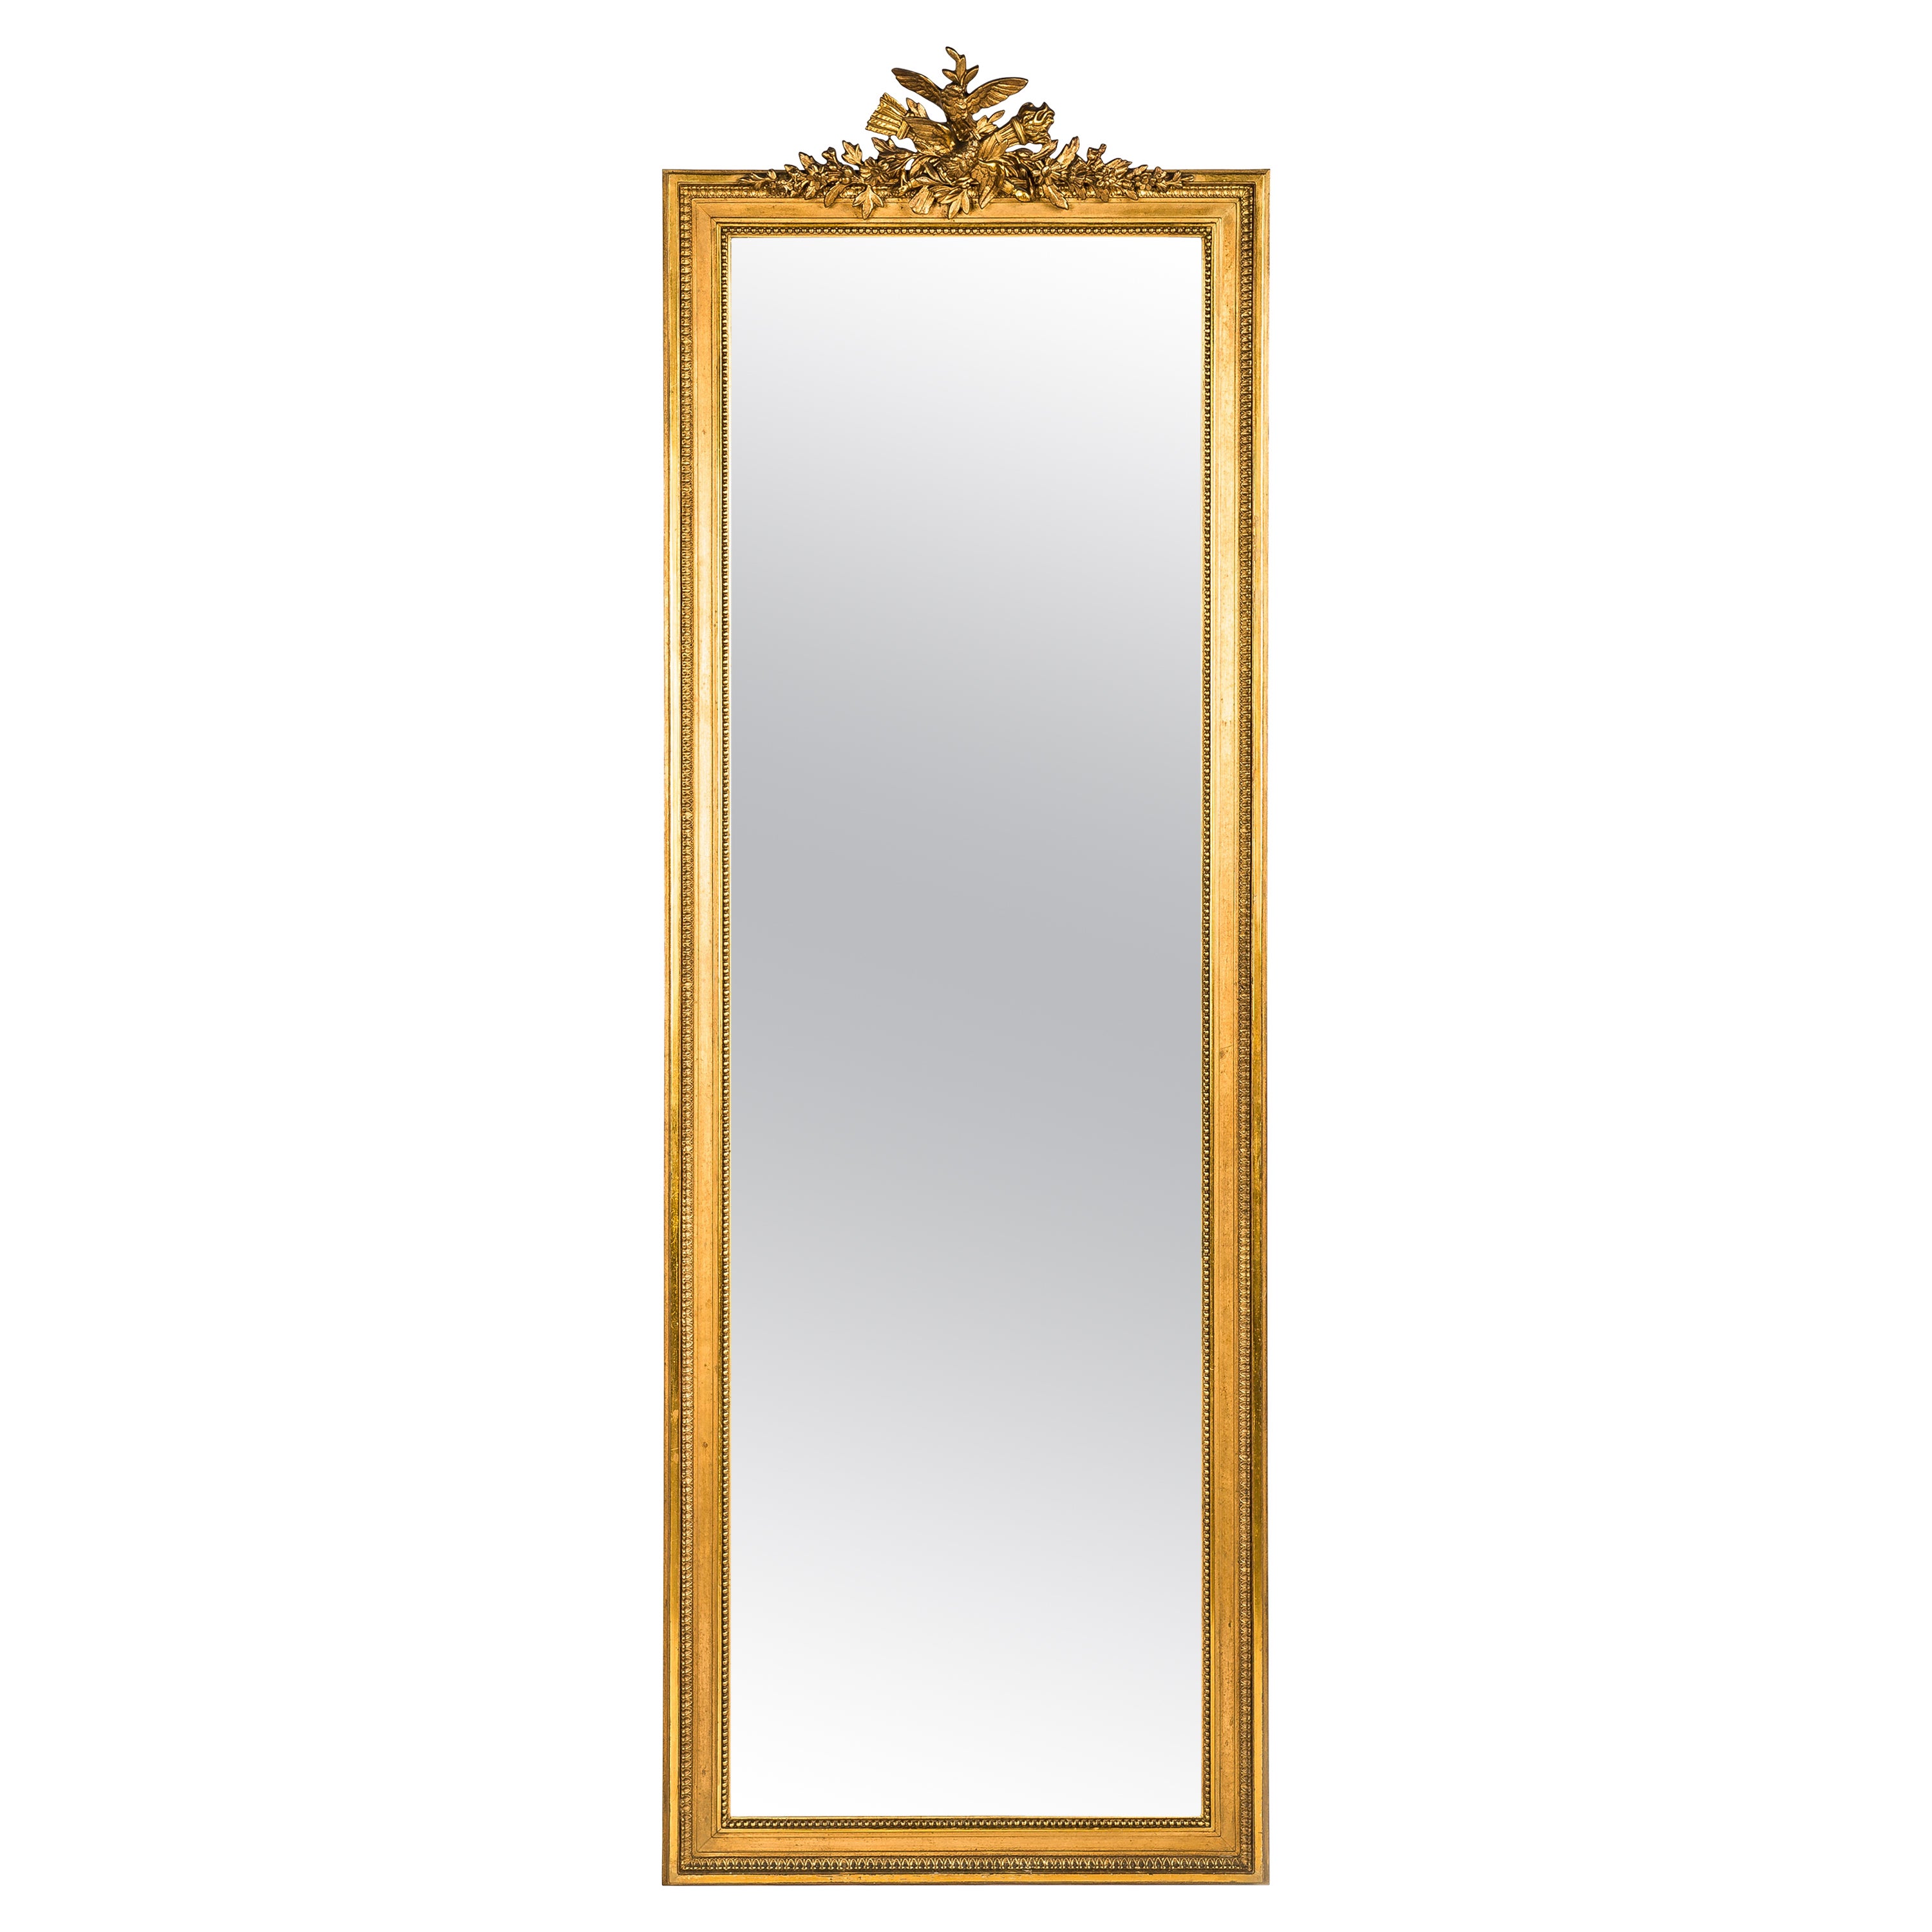 Antique 19th Century Louis XVI  Gold Leaf Gilt French Pier Mirror with Crest